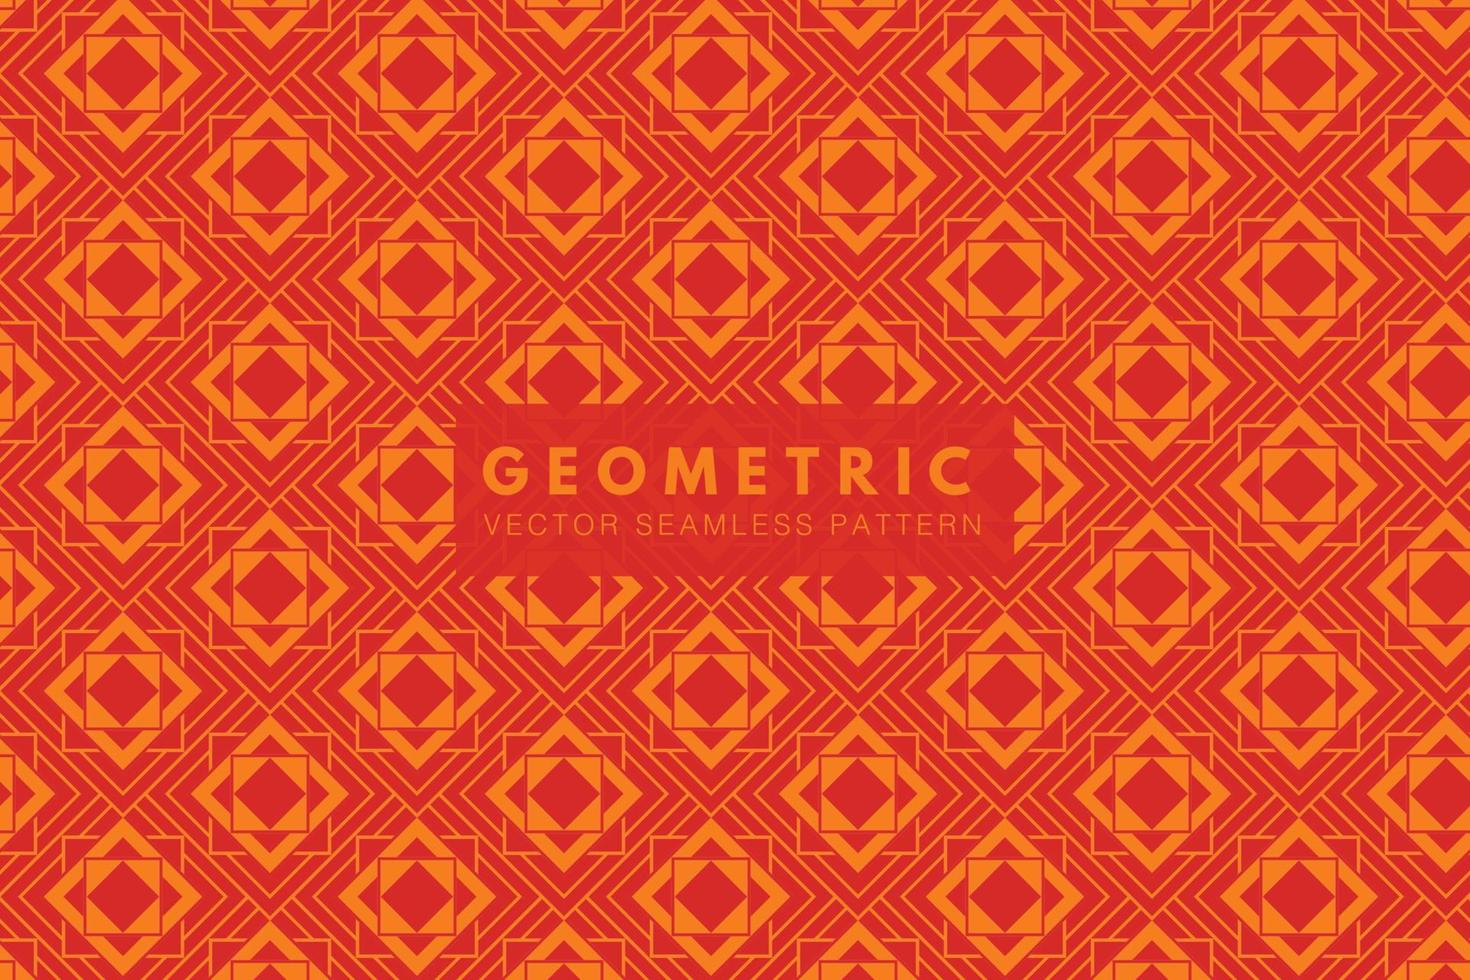 geometrisch hell rot Platz Formen. abstrakt Vektor nahtlos wiederholen Muster